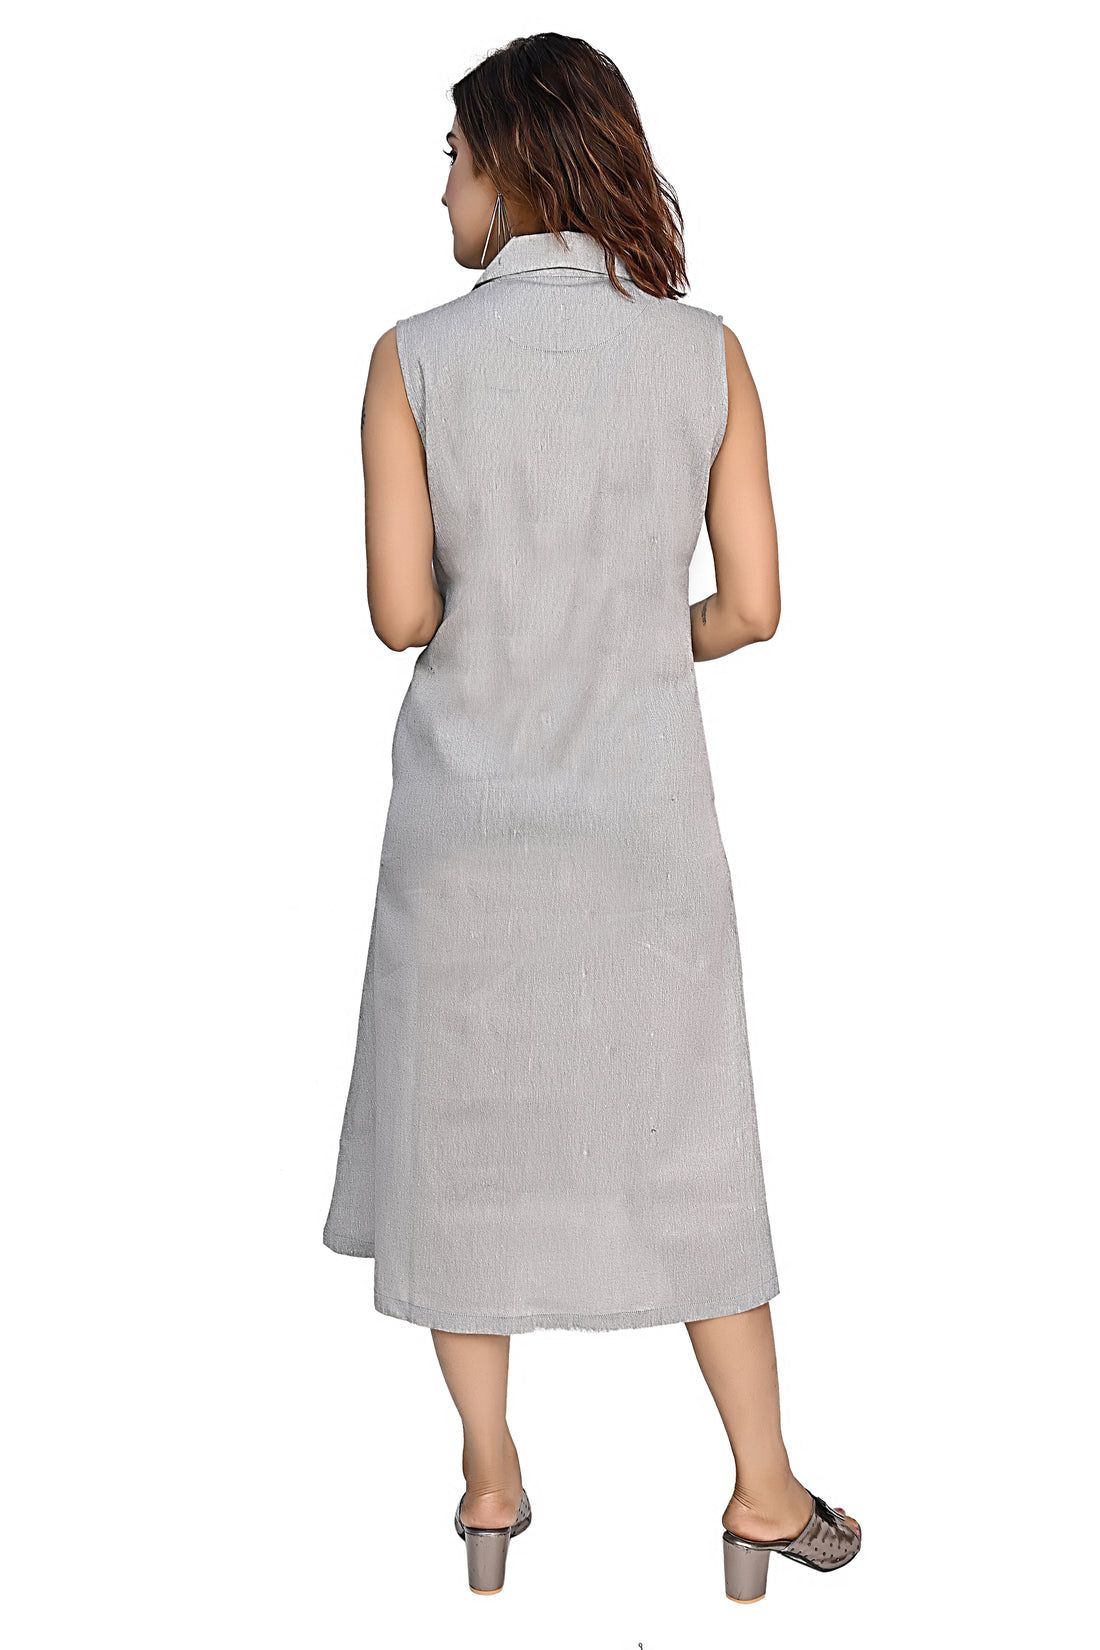 Nirmal Online Premium  Quality Cotton Tunic For Women In Grey Colour